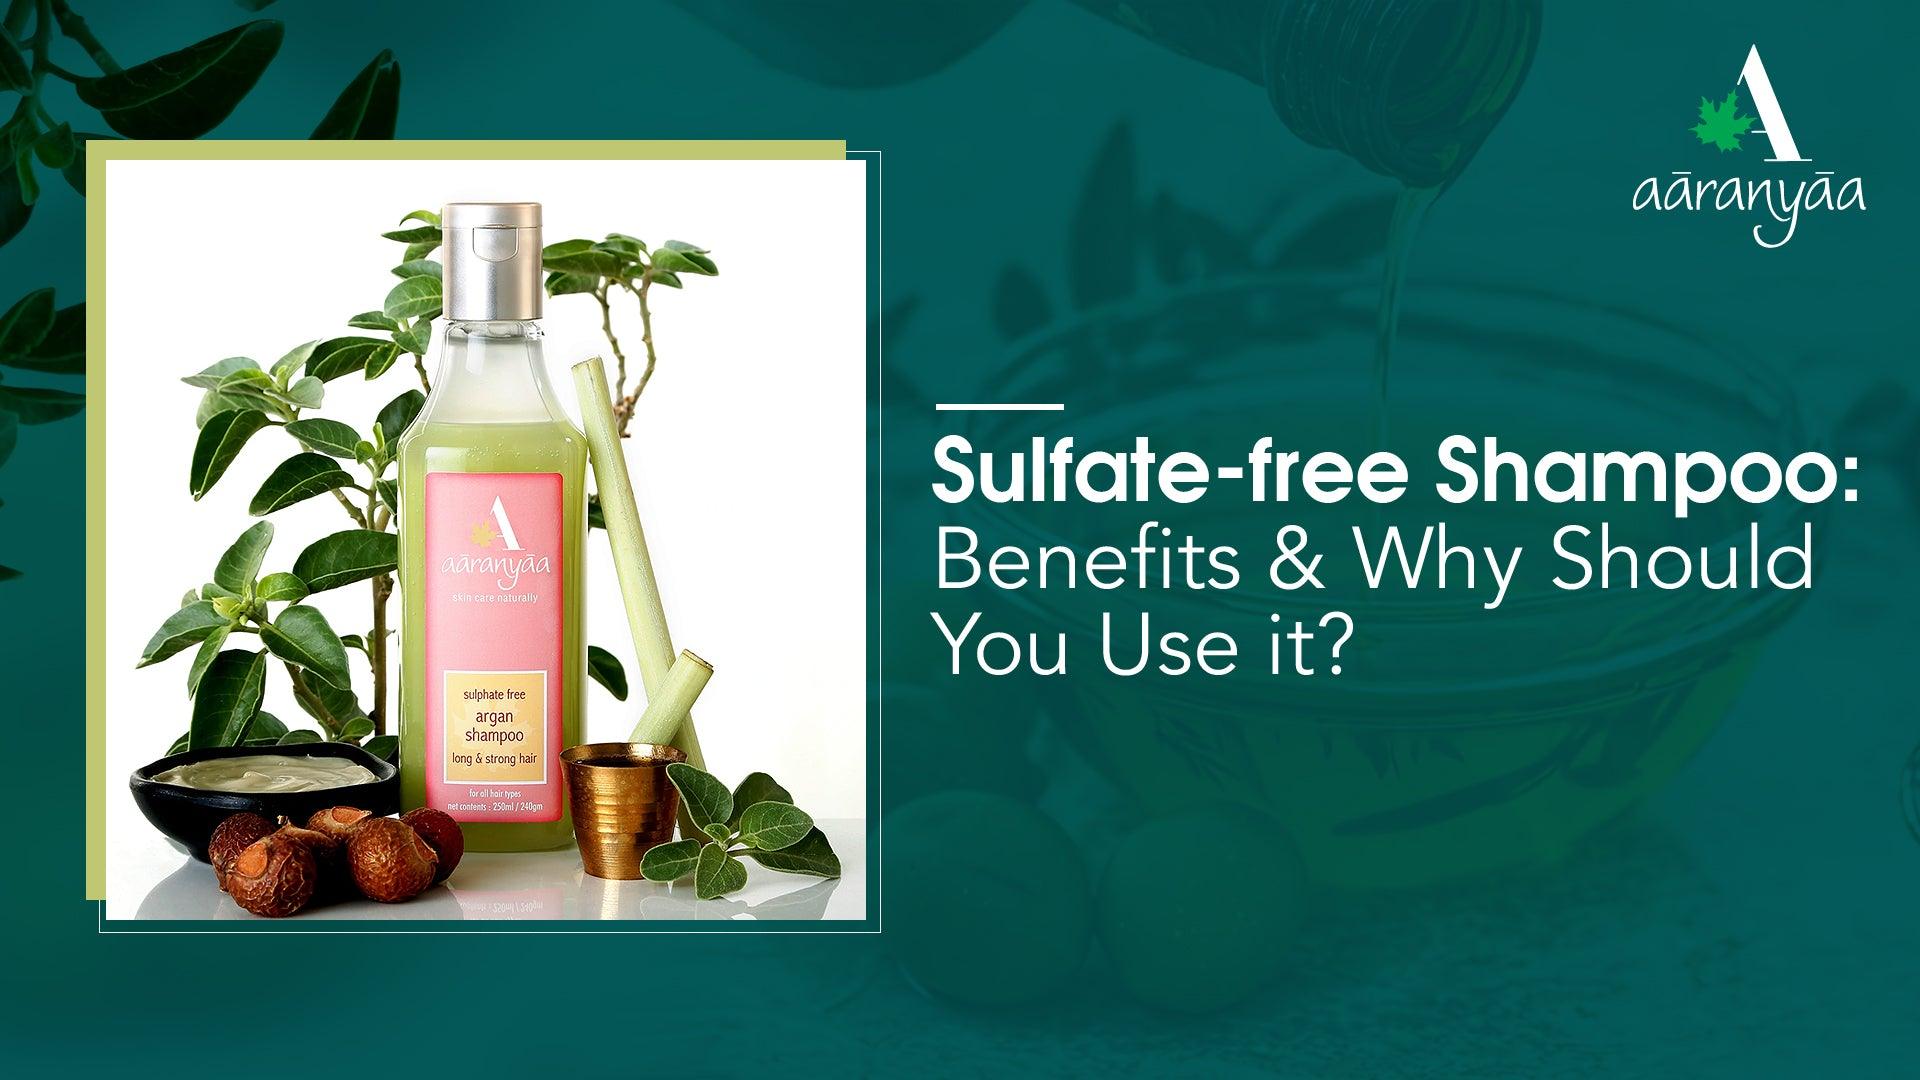 Best Sulfate Free Shampoo